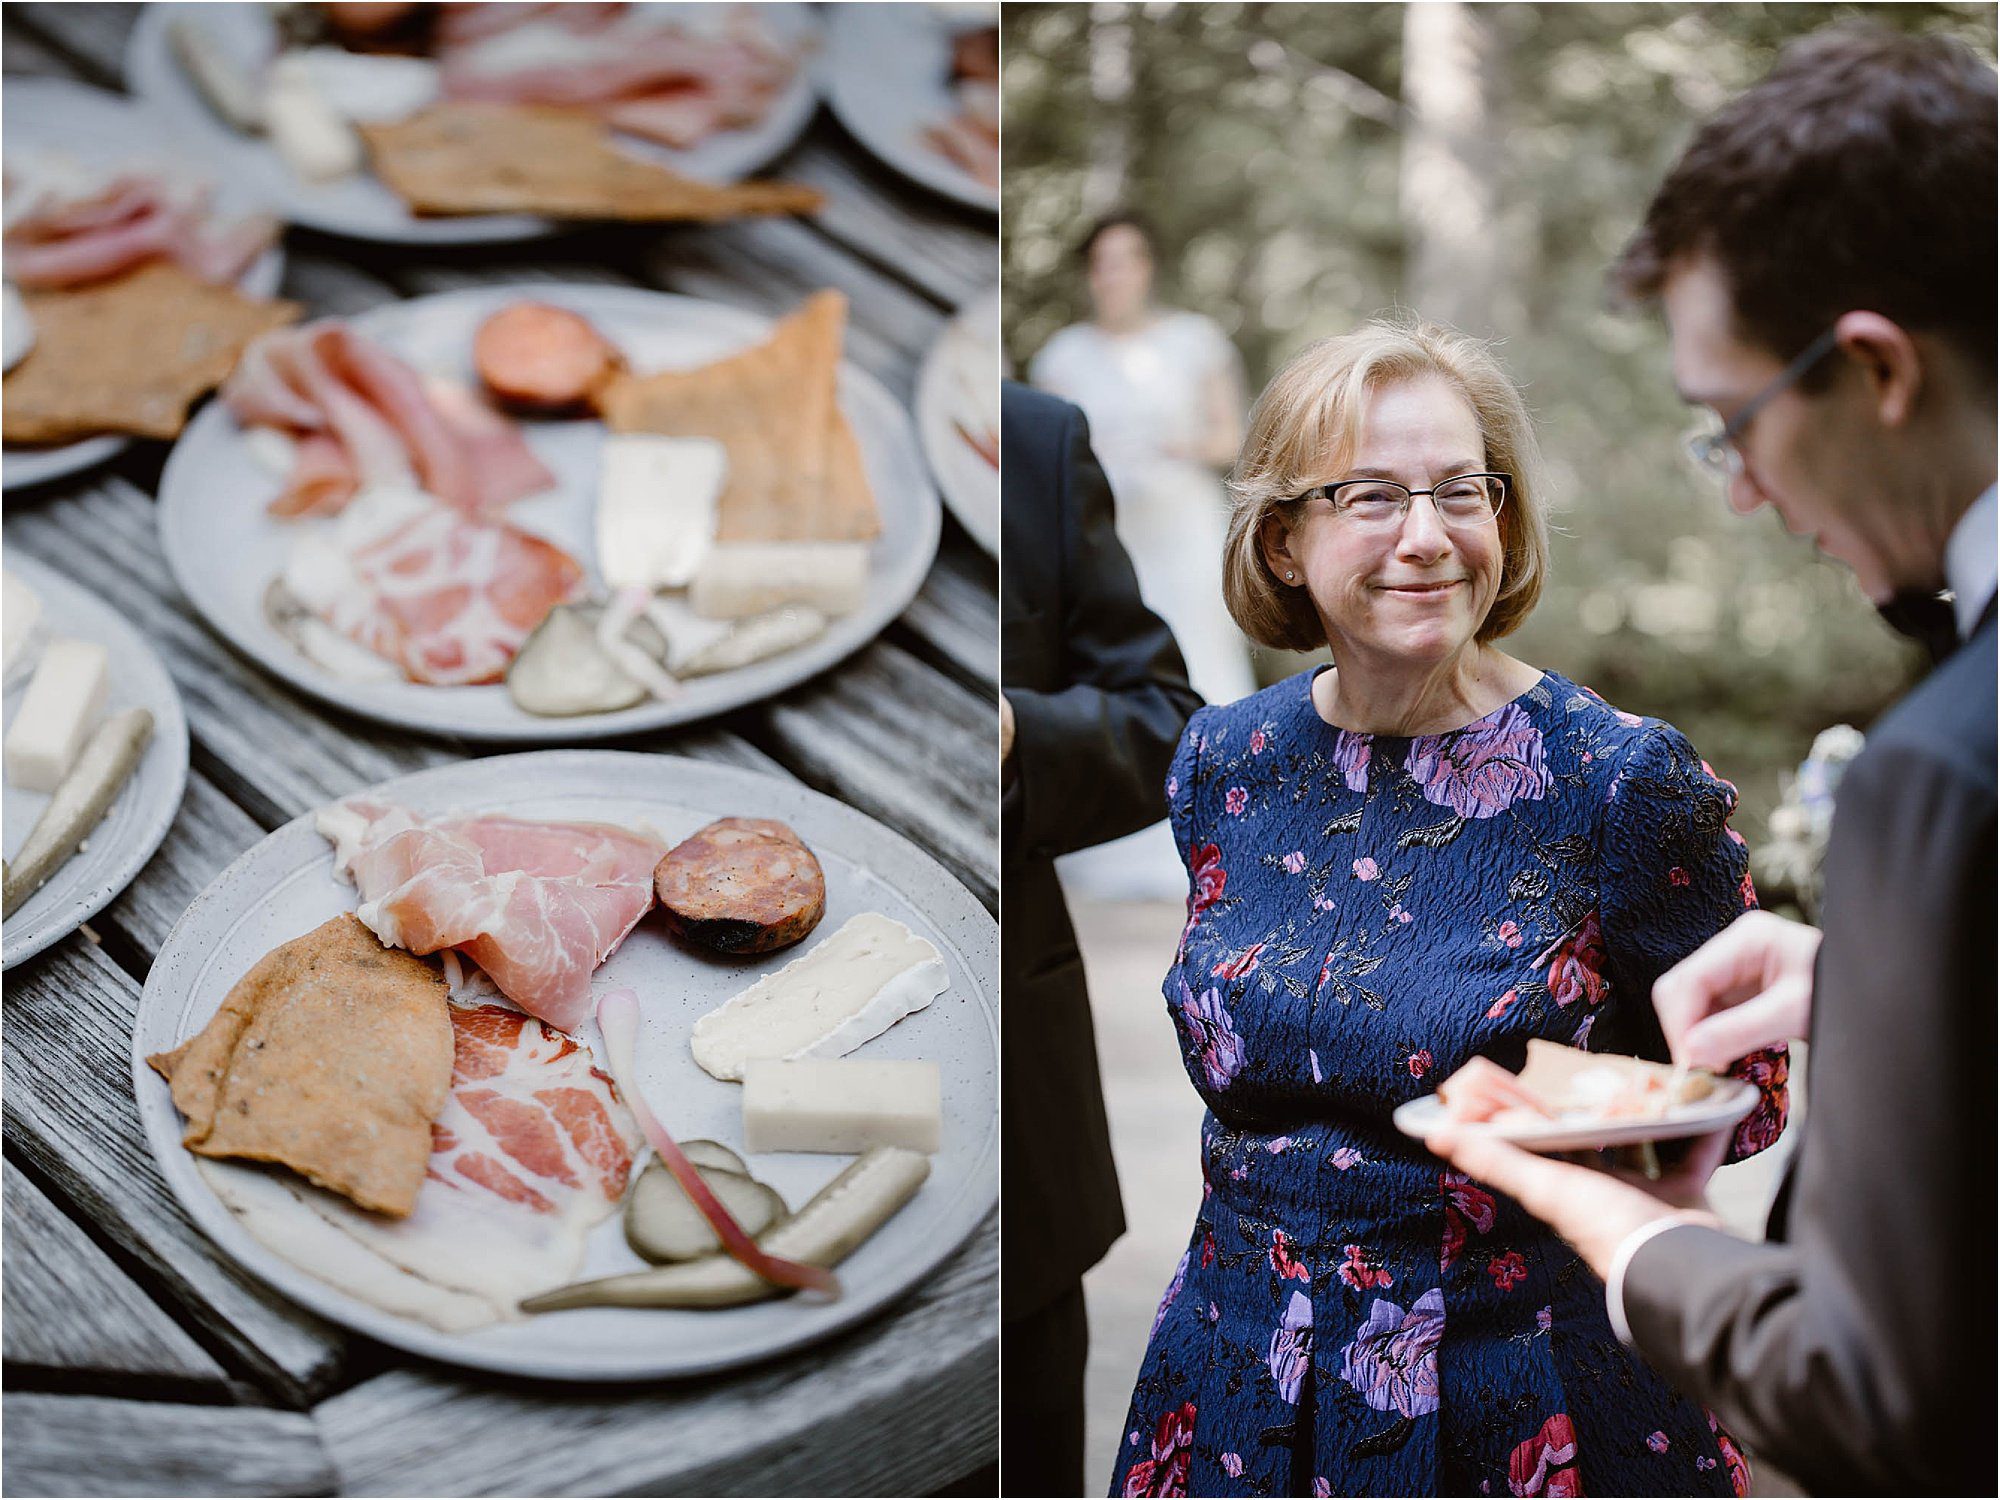 food and guests at micro wedding